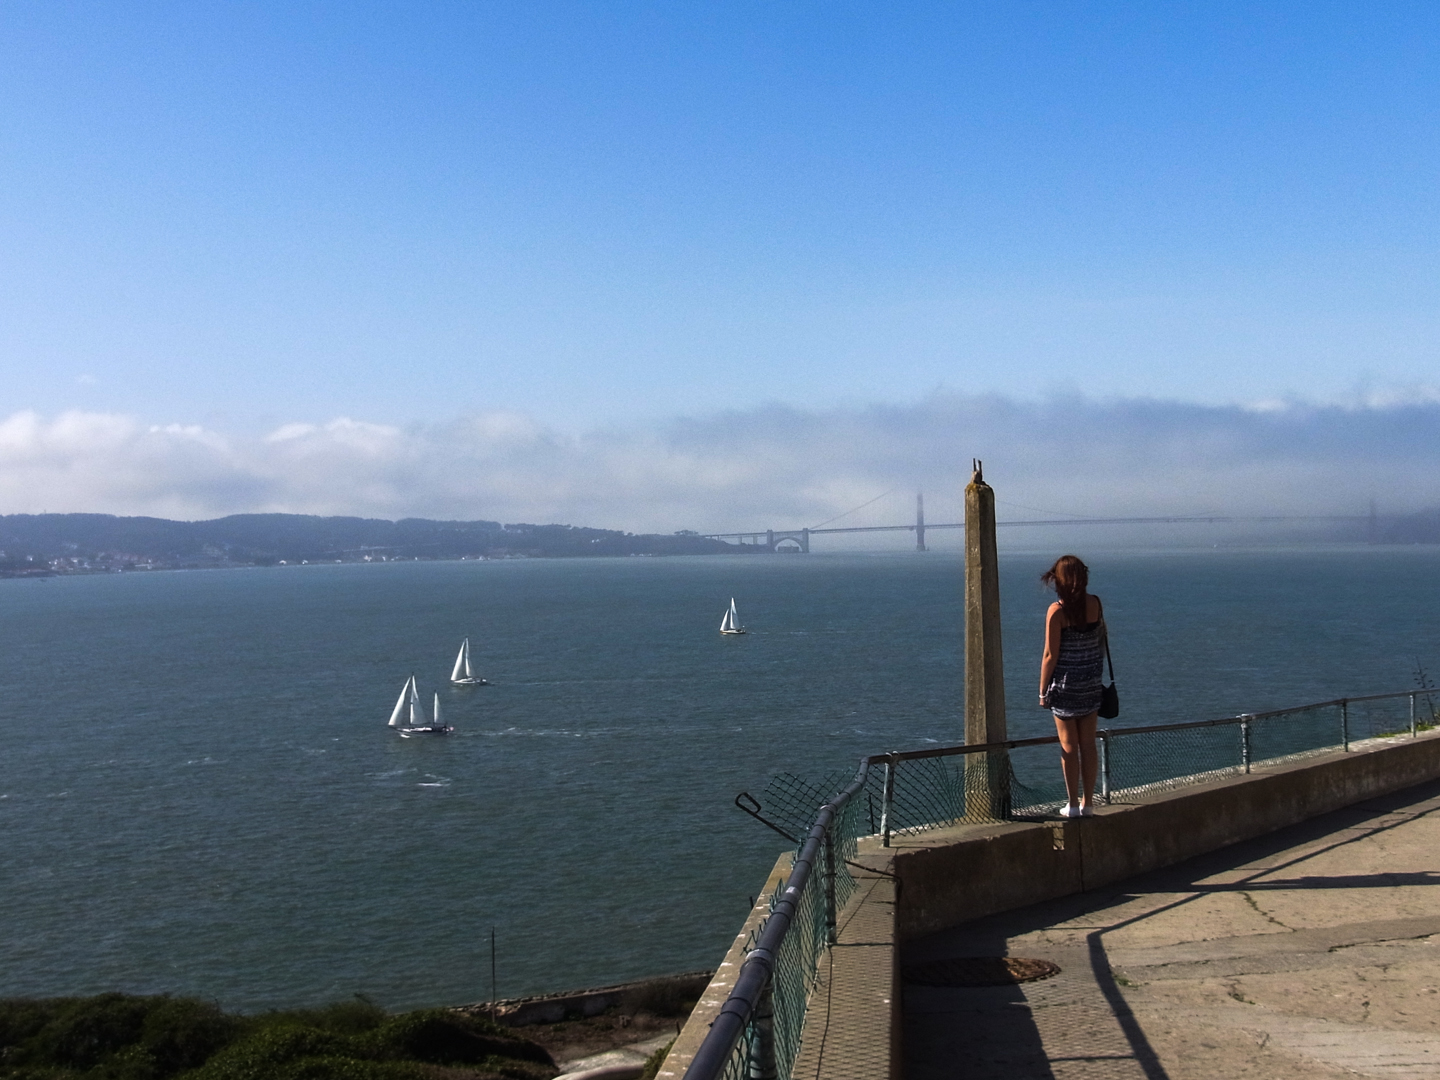 Looking back towards Golden Gate